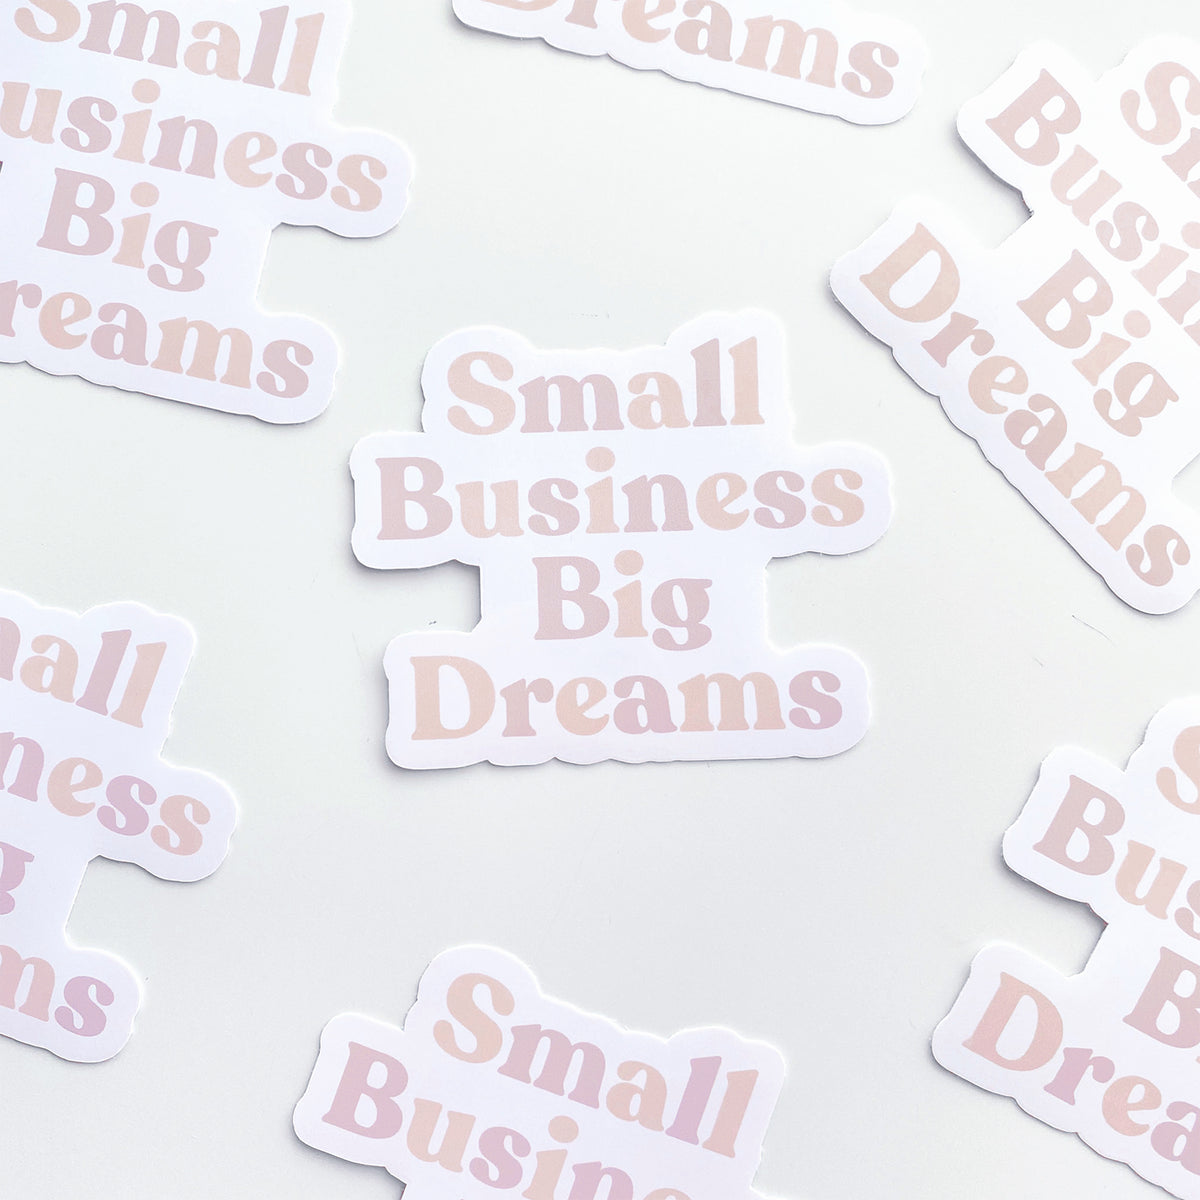 Small Business Big Dreams Sticker